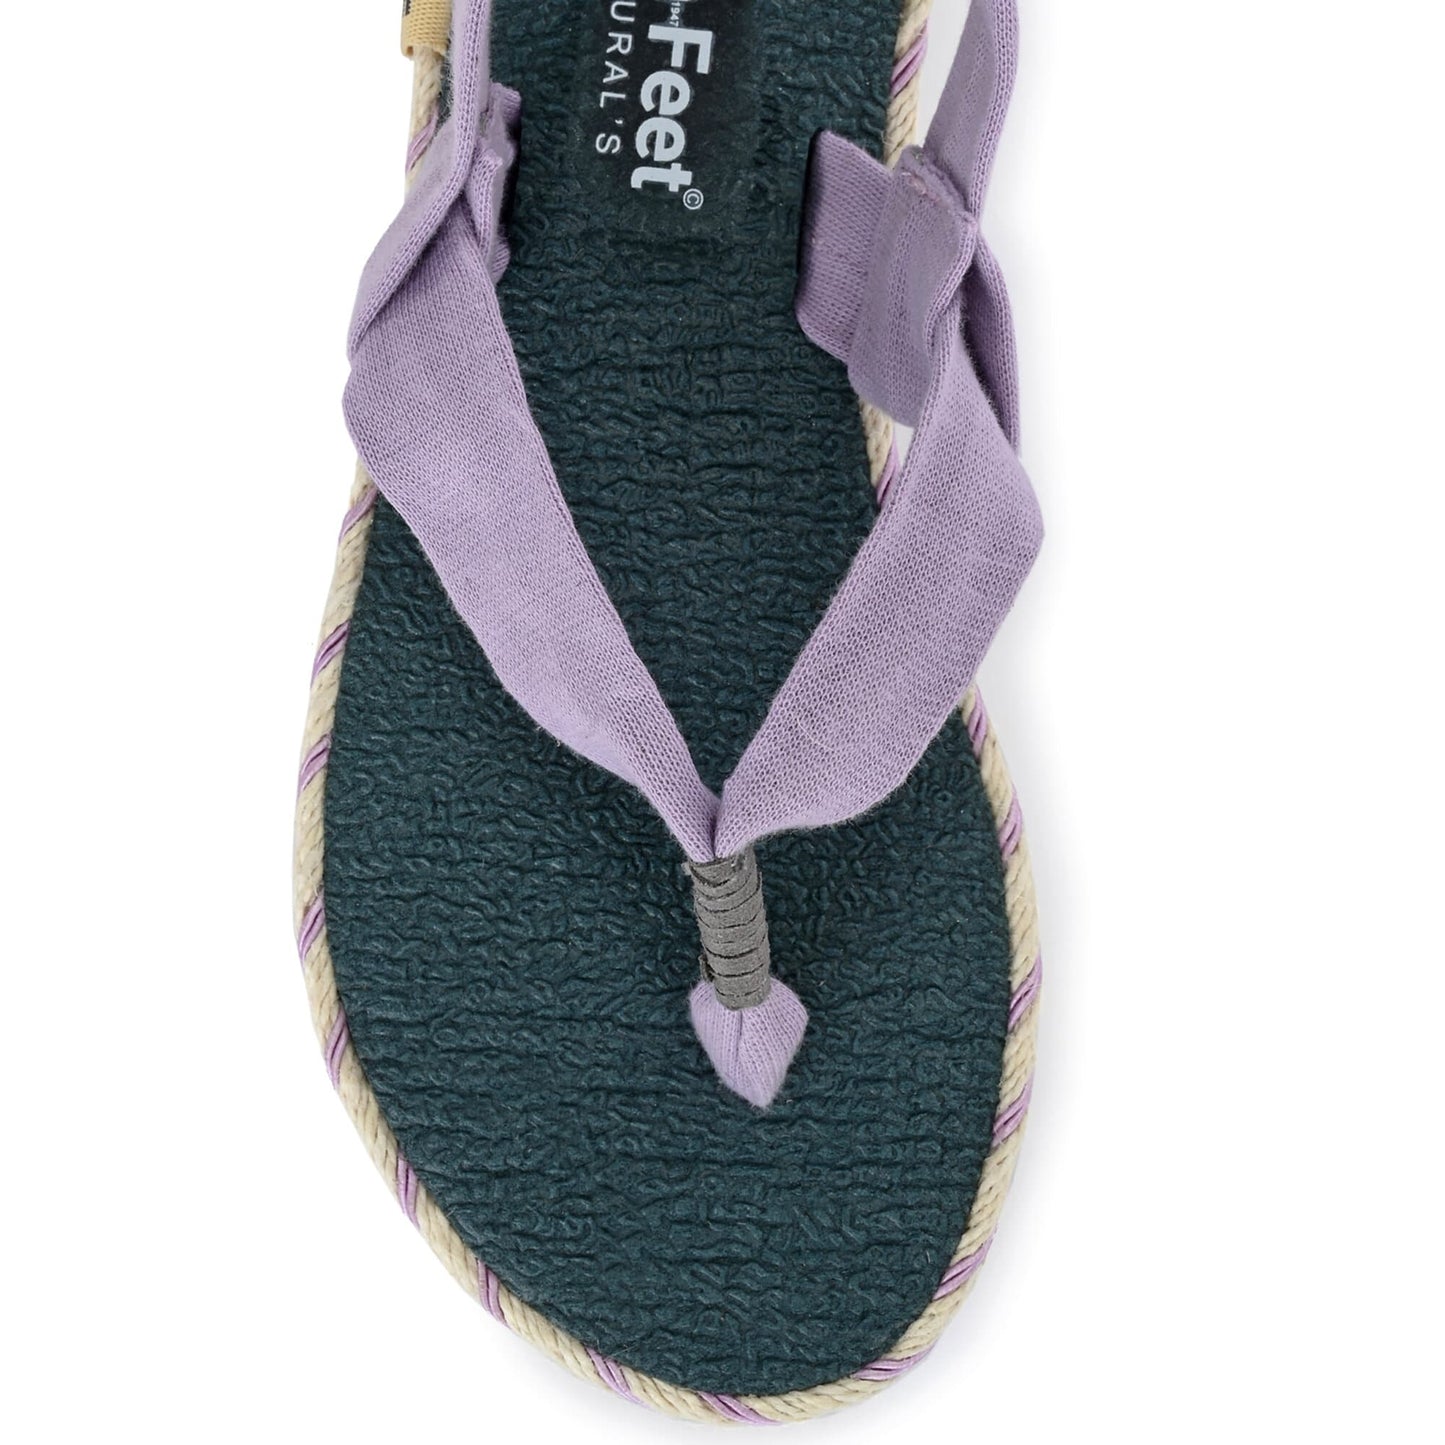 Alexa Light Purple Yoga Mat Sandals for Kids